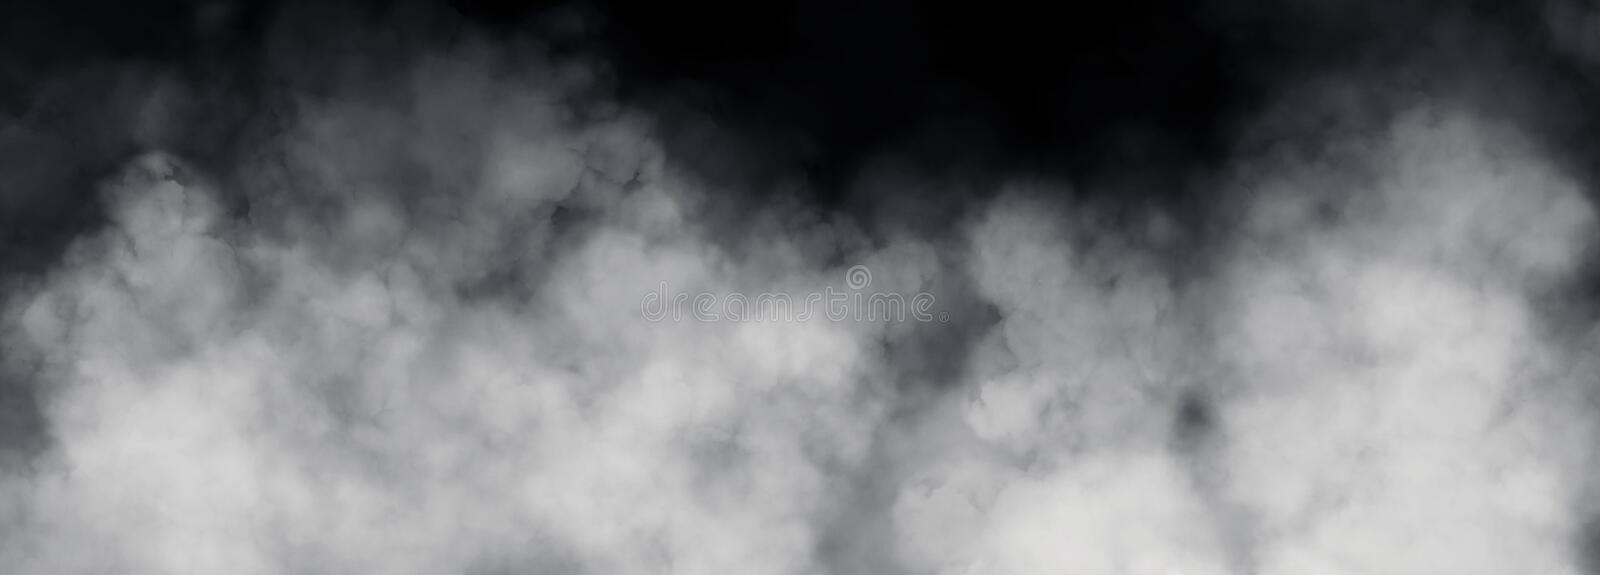 White smoke or fog in black background stock photo